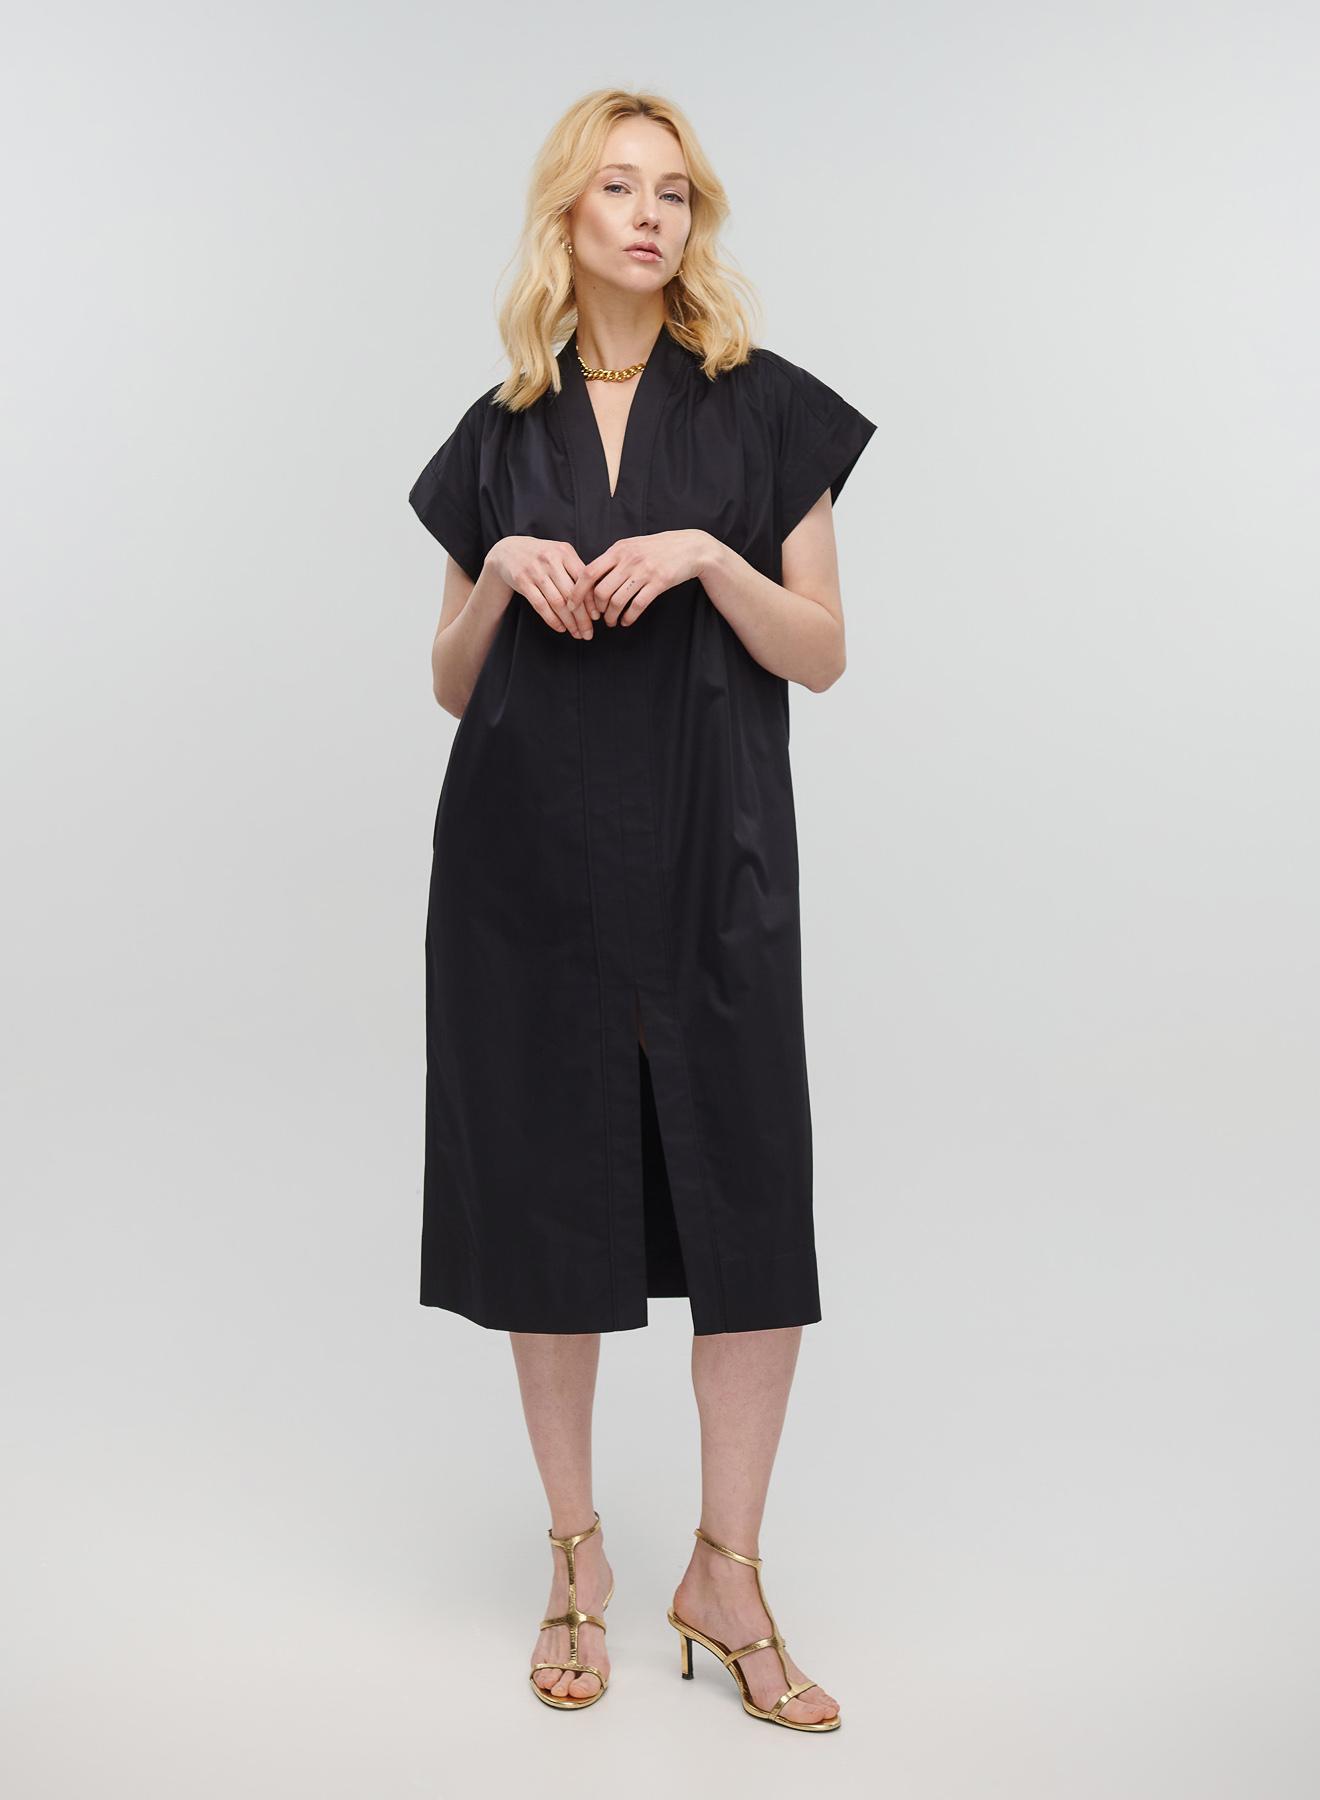 Black long sleeveless Dress with V neckline, belt and front slit Milla - 3